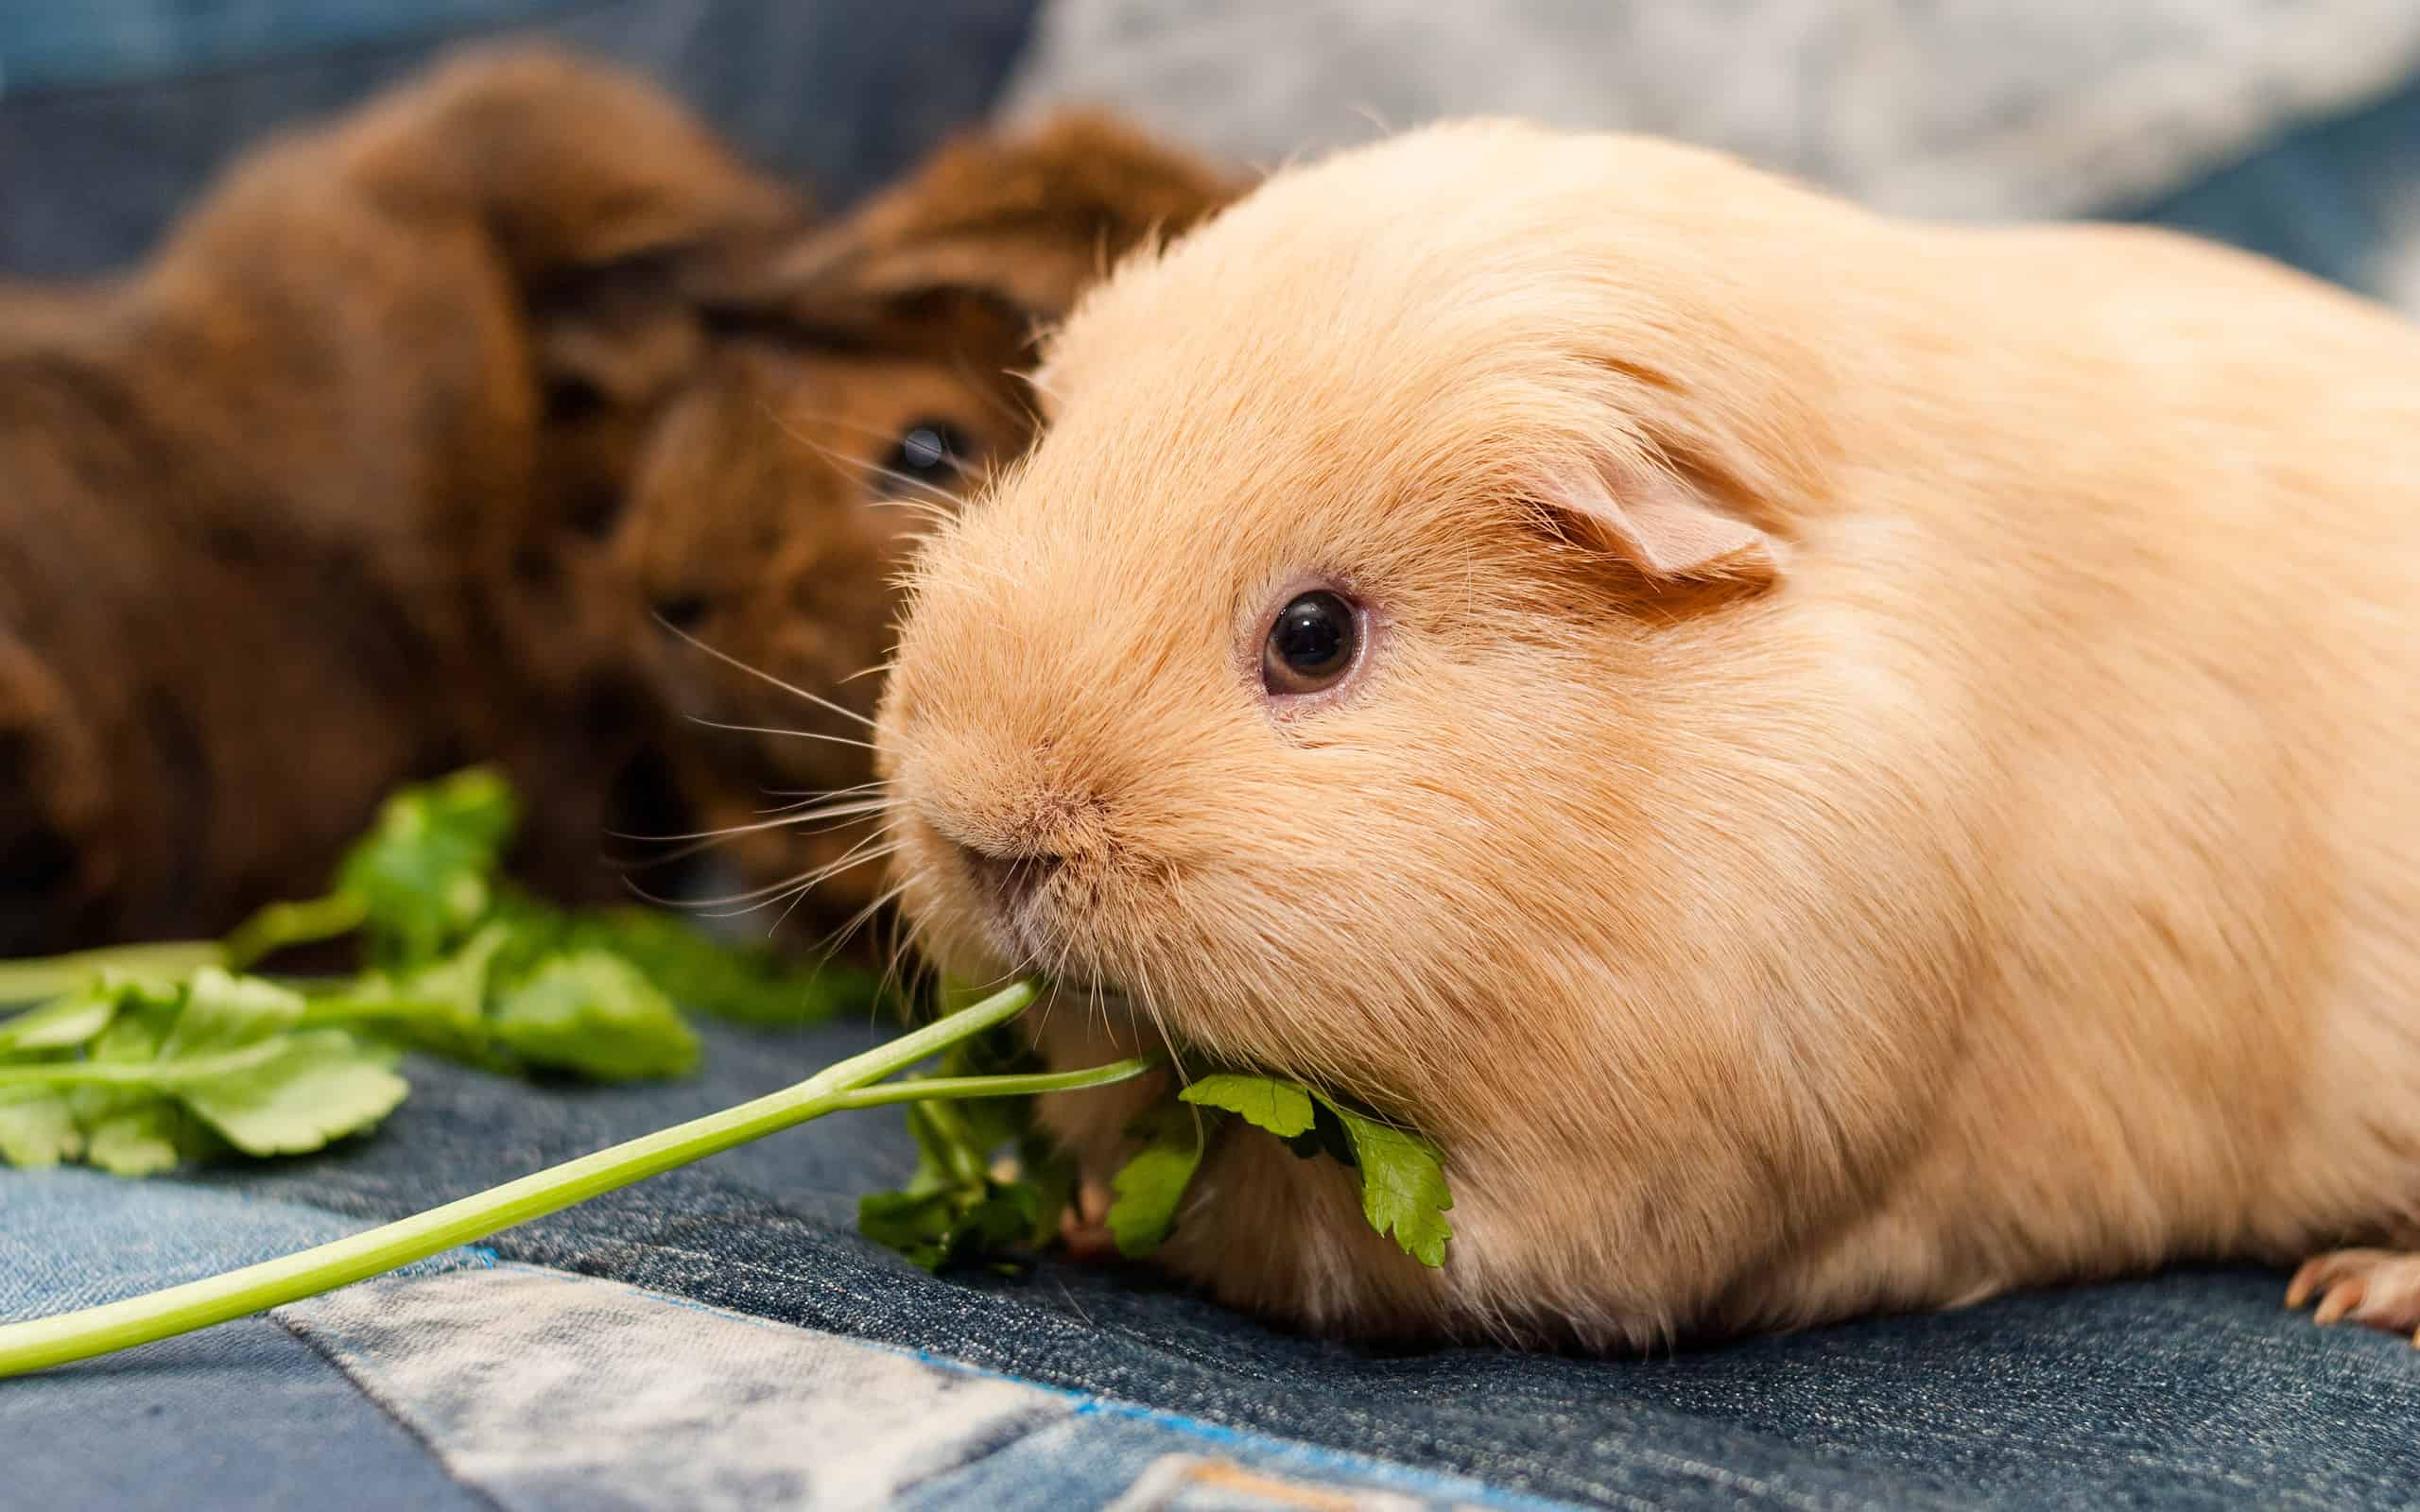 Self guinea pig eats parsley while looking at camera